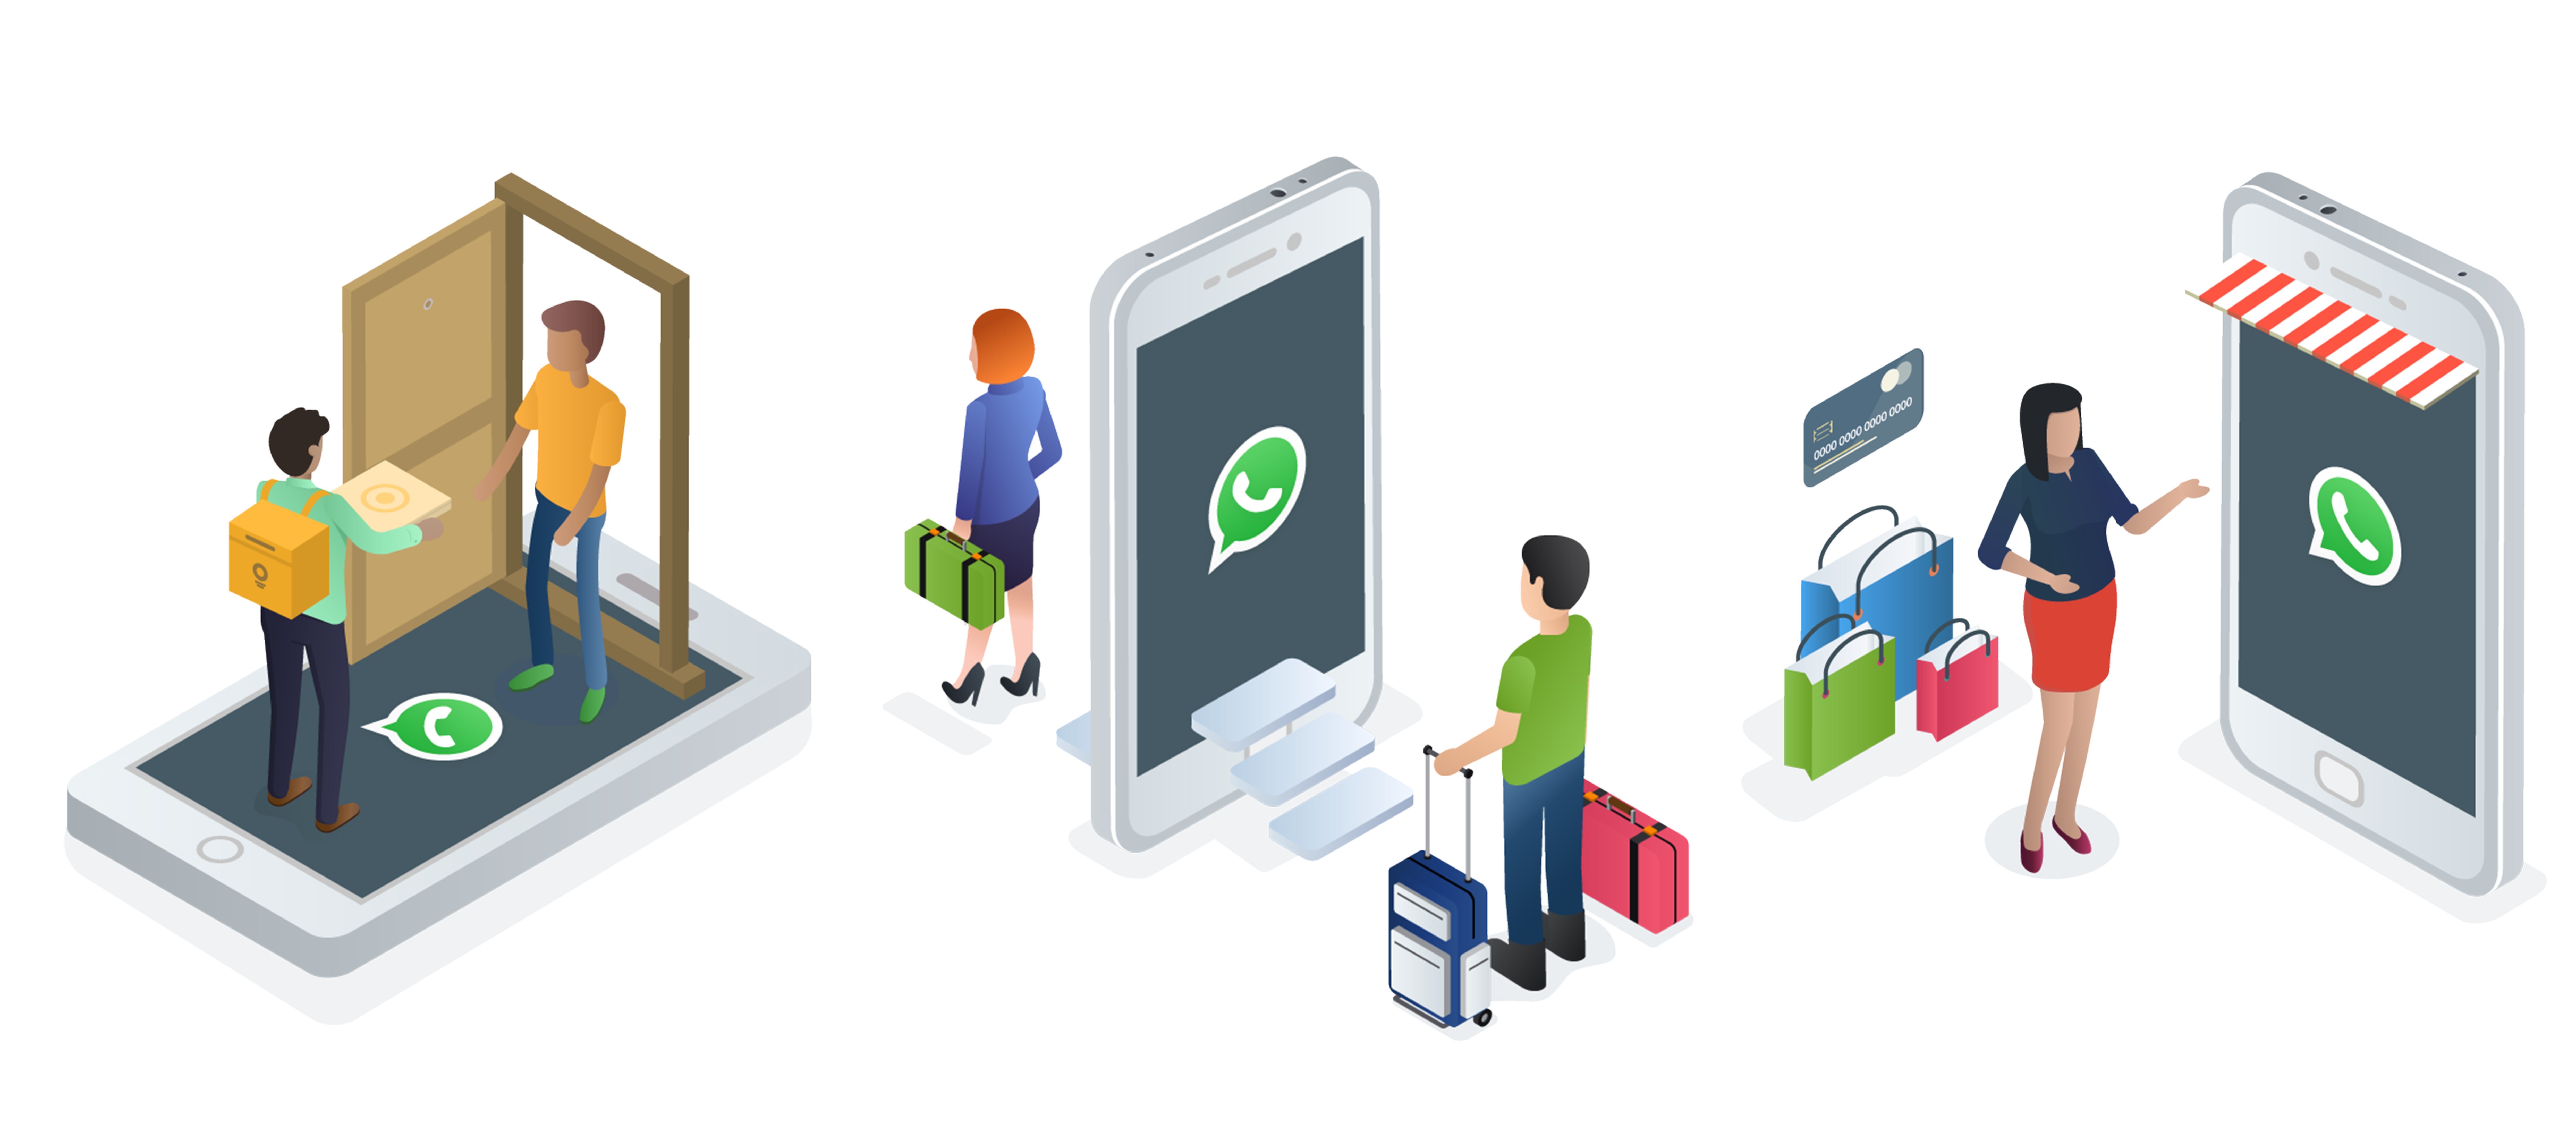 WhatsApp Business API use cases